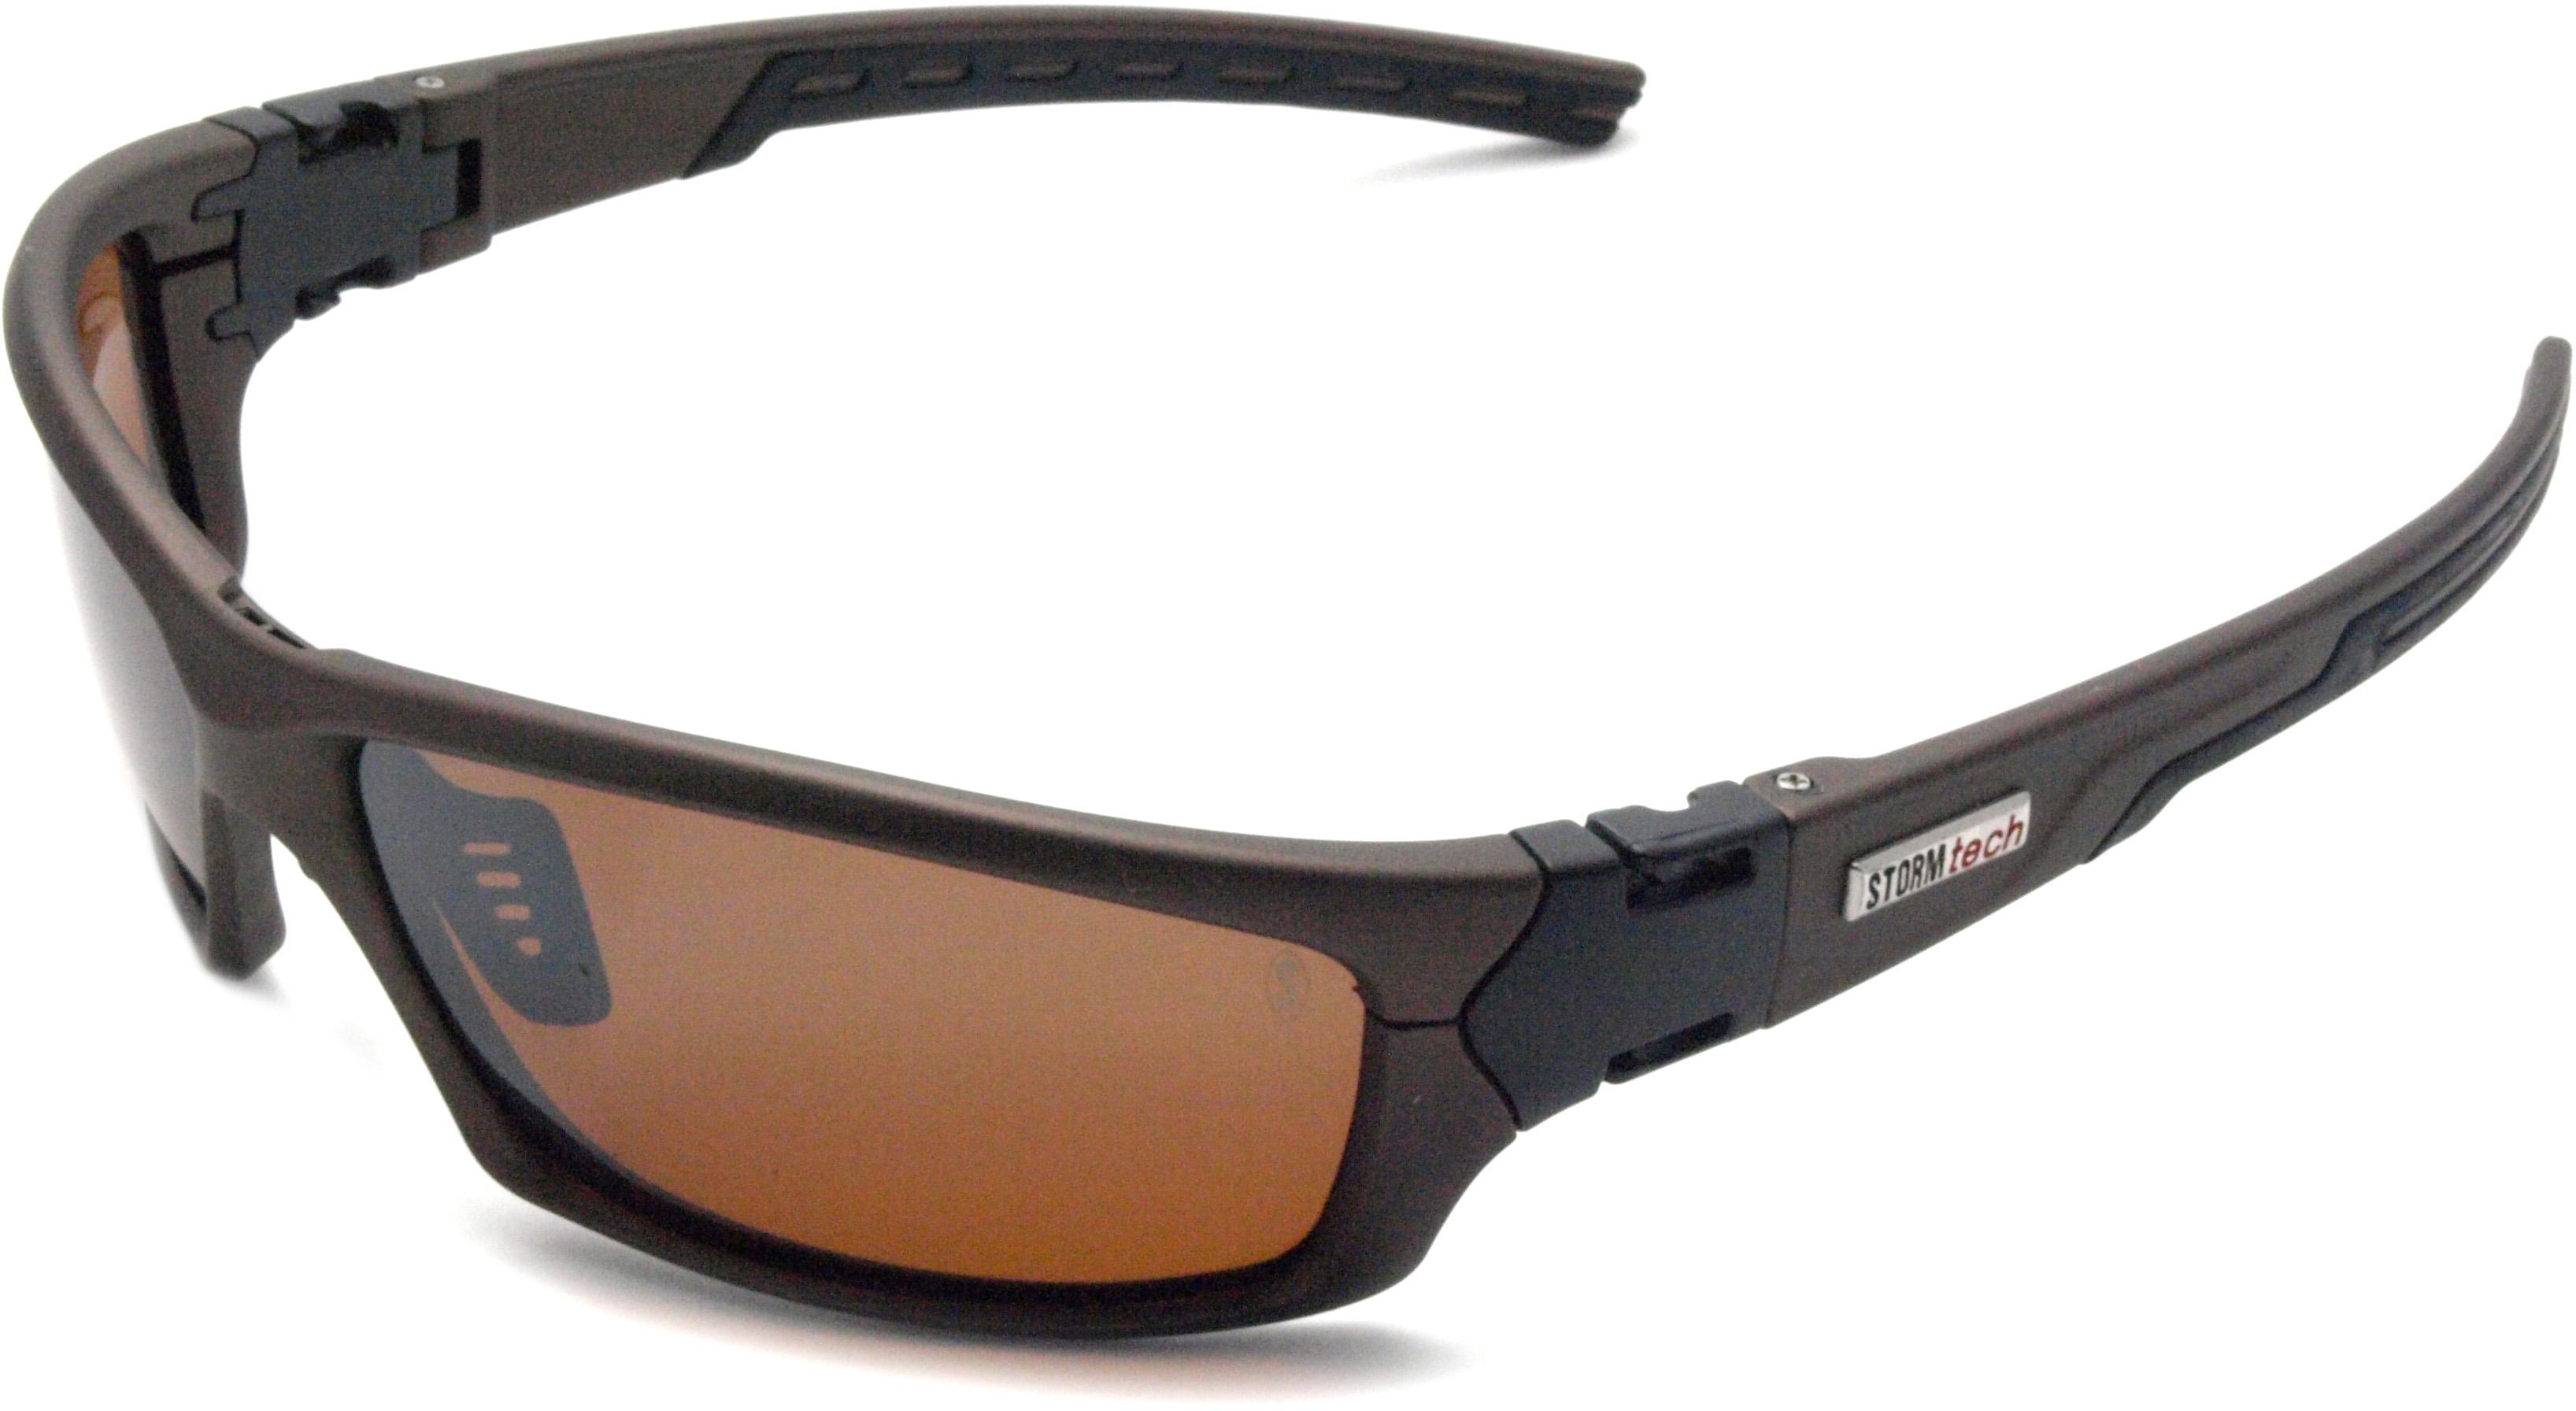 Stormtech Autolycus Sunglasses - Chocolate